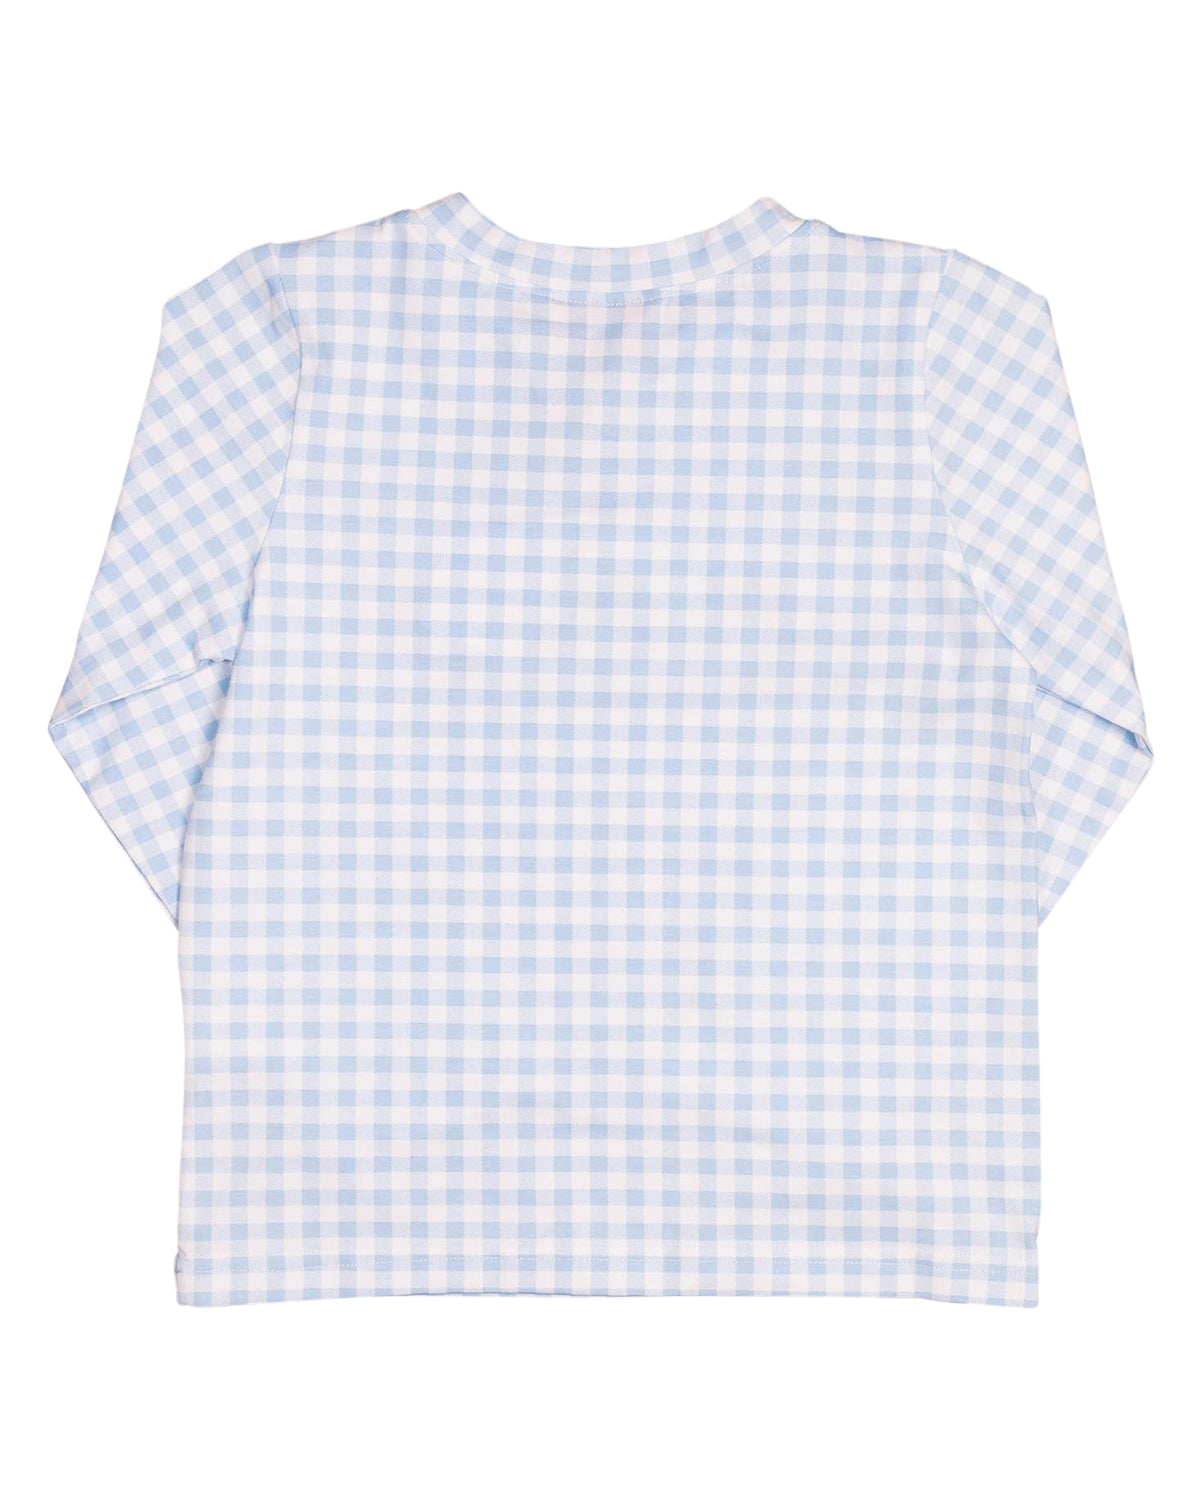 Turkey Applique Gingham Knit Shirt- FINAL SALE